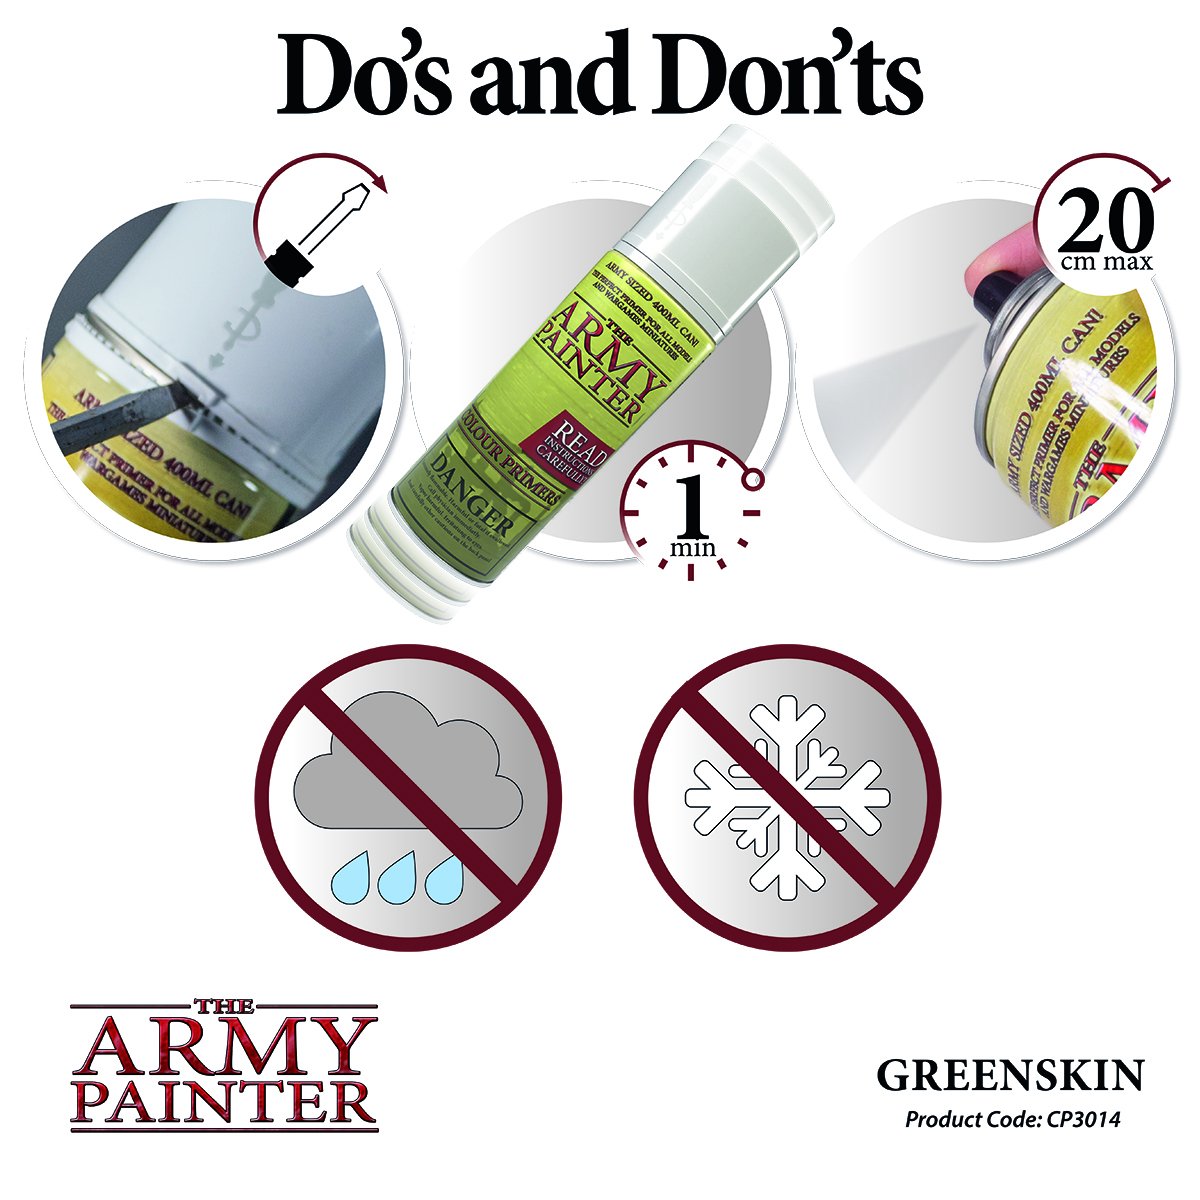 Army Painter: Anti Shine Matt Varnish Spray Paint Primer